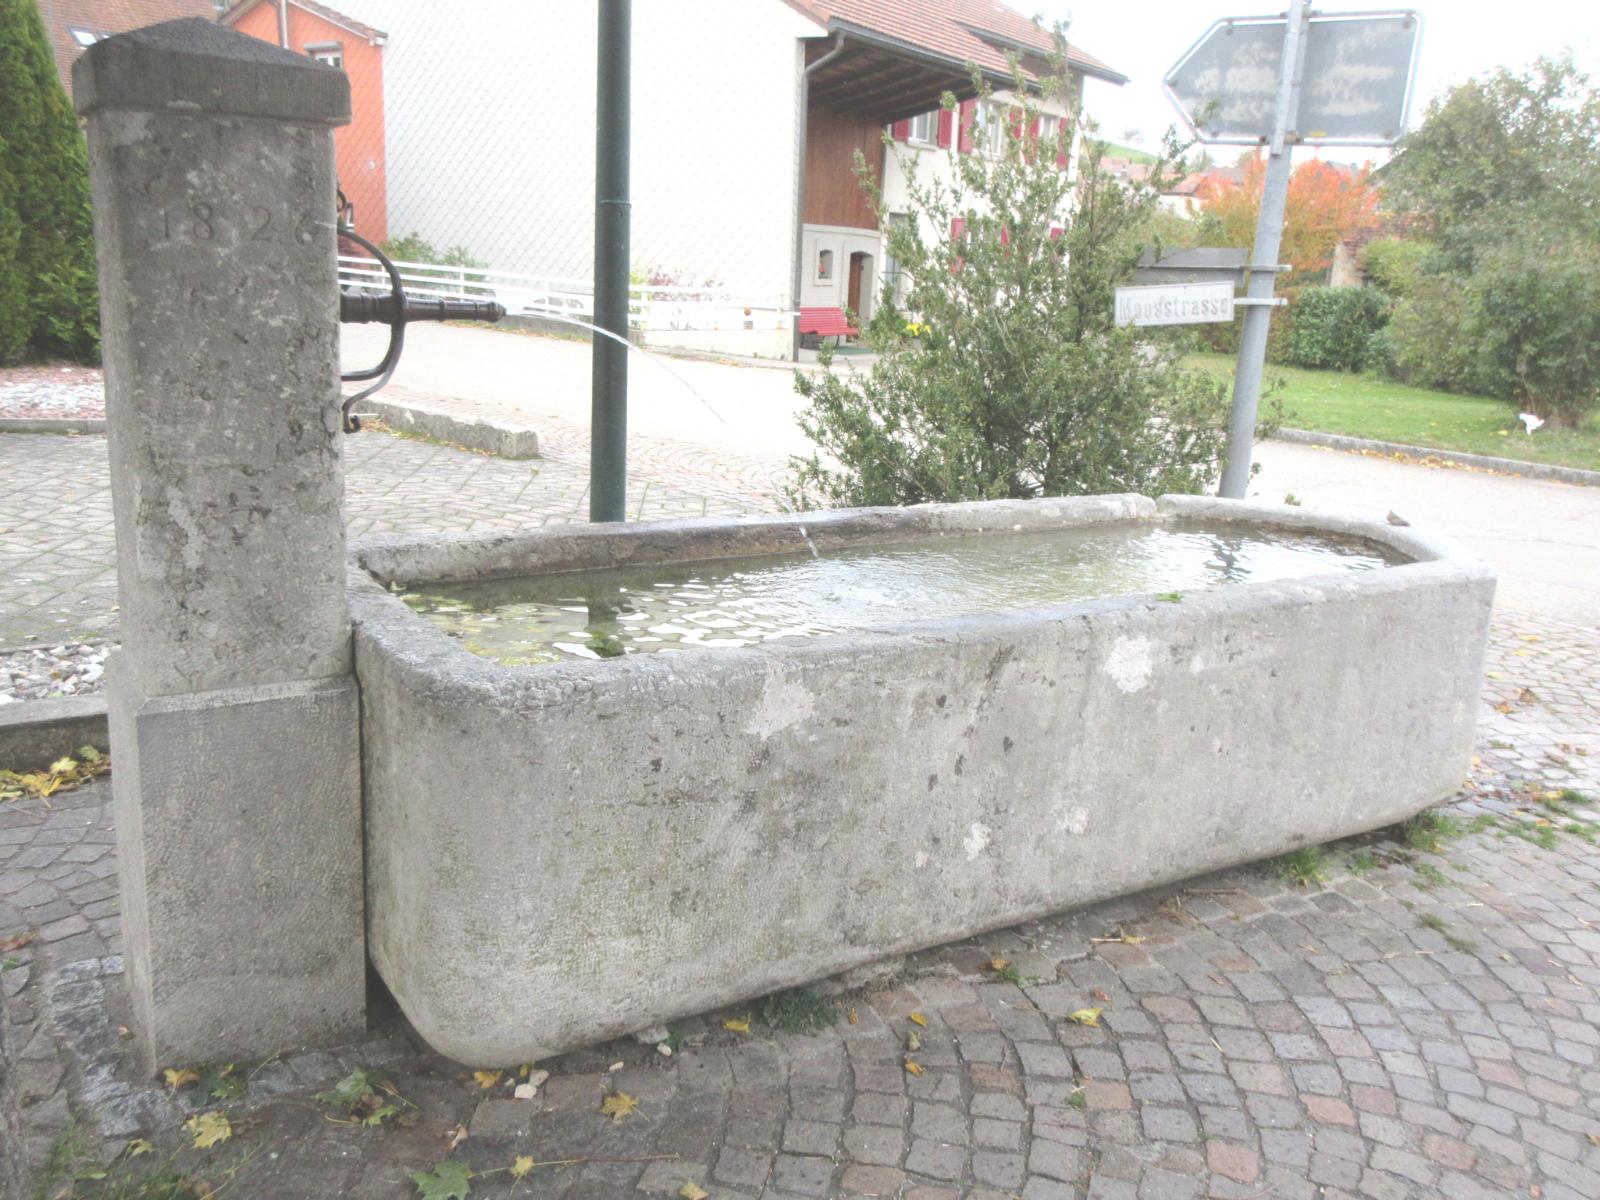 Dorfplatz *** 1826 *** Jurakalk-Monolith 3.2 x 1.6 m *** Jurakalk *** <a href="./files/wasseranalyse_so_-_herbetswil-dorfplatz.pdf" target="_blank">Wasseranalyse</a>